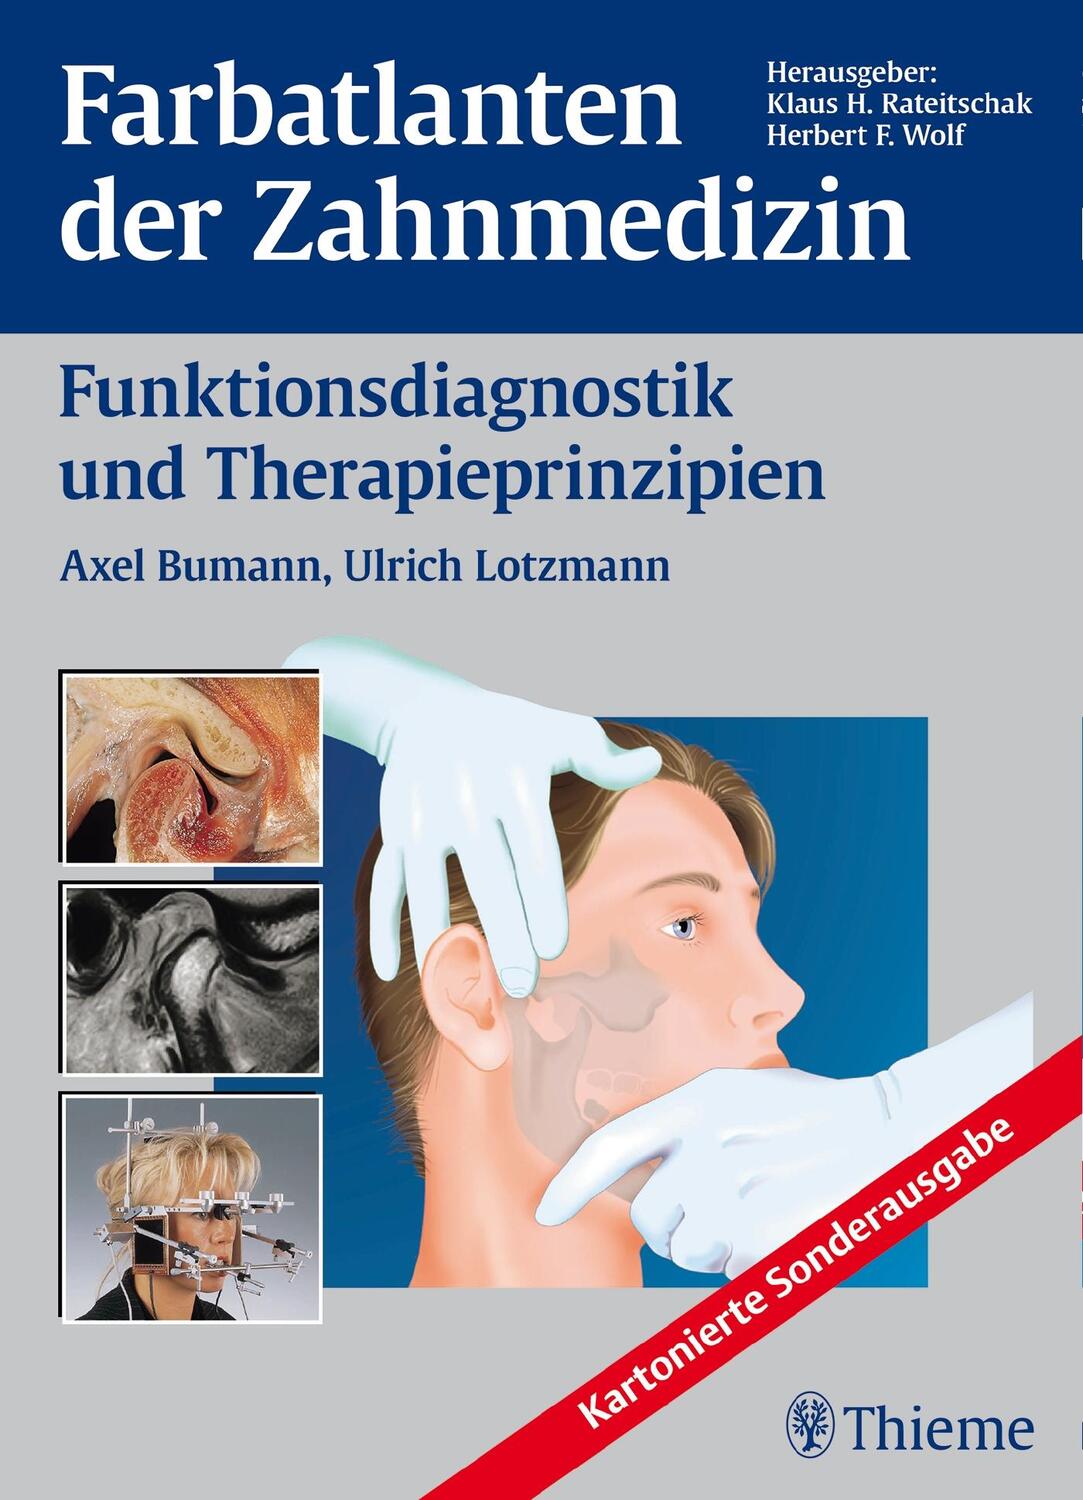 Farbatlanten der Zahnmedizin Band 12: Funktionsdiagnostik und Therapieprinzipien - Bumann, Axel